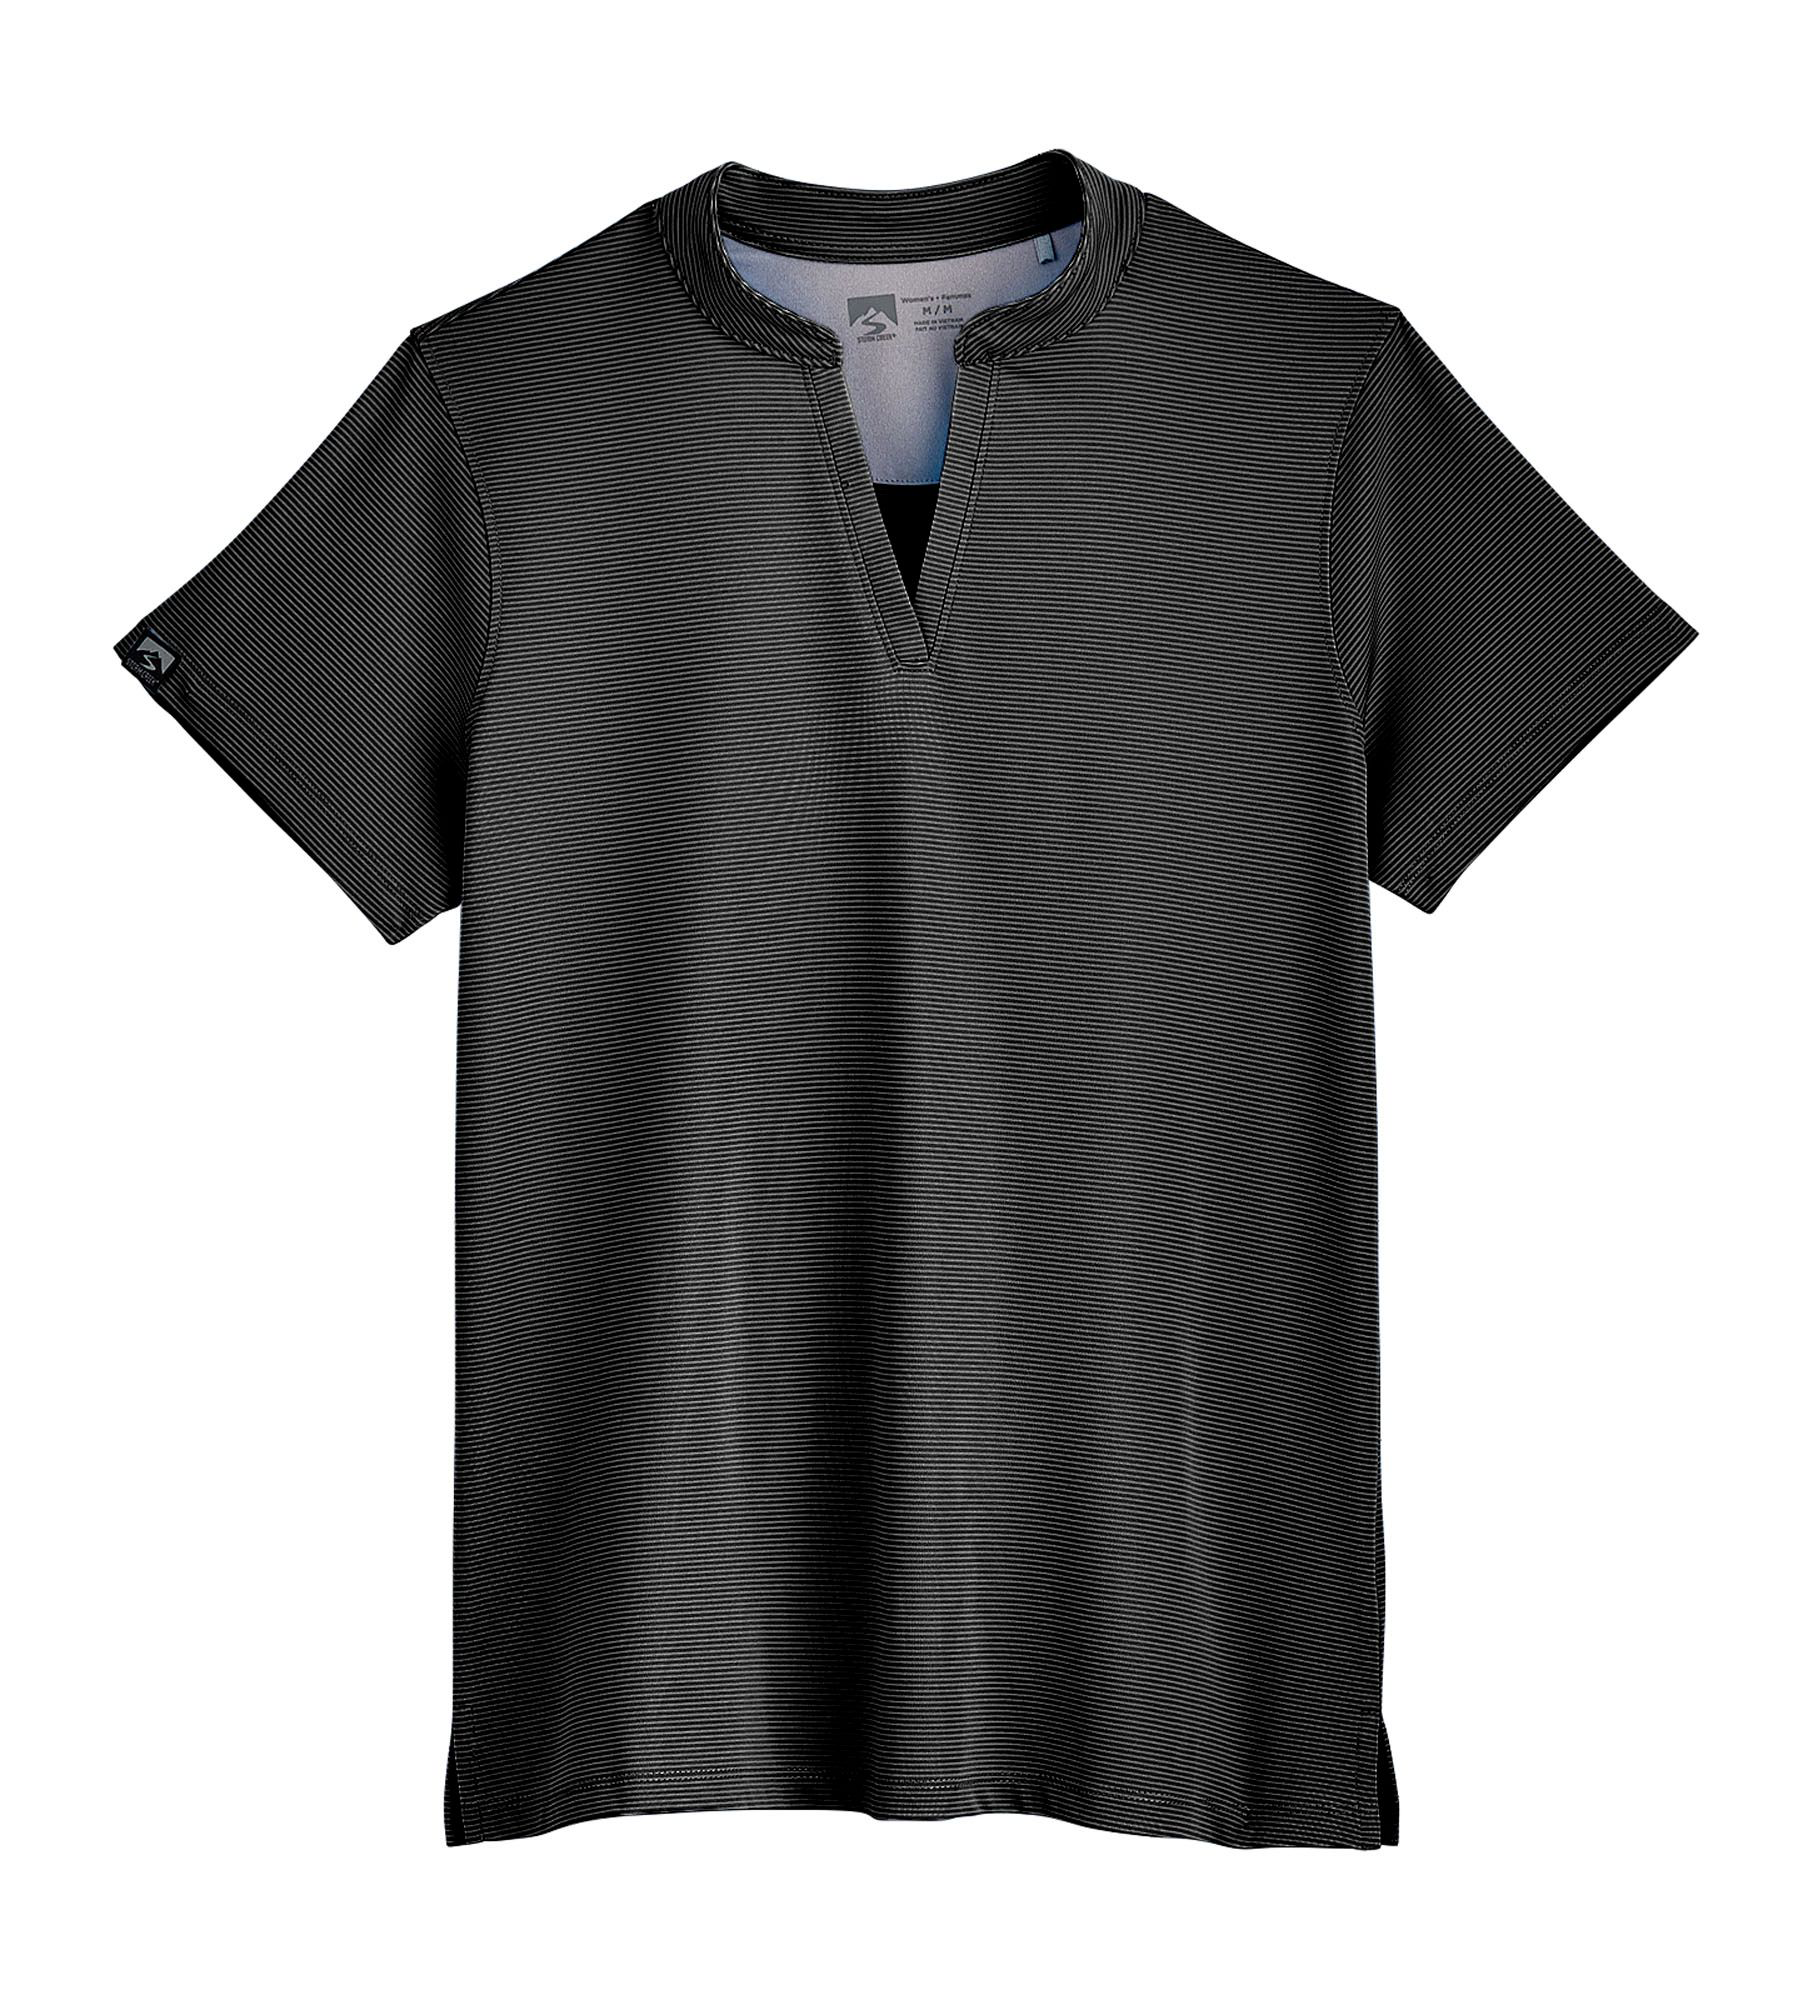 Storm Creek Optimist Short-Sleeve Polo Shirt for Ladies - Black - S